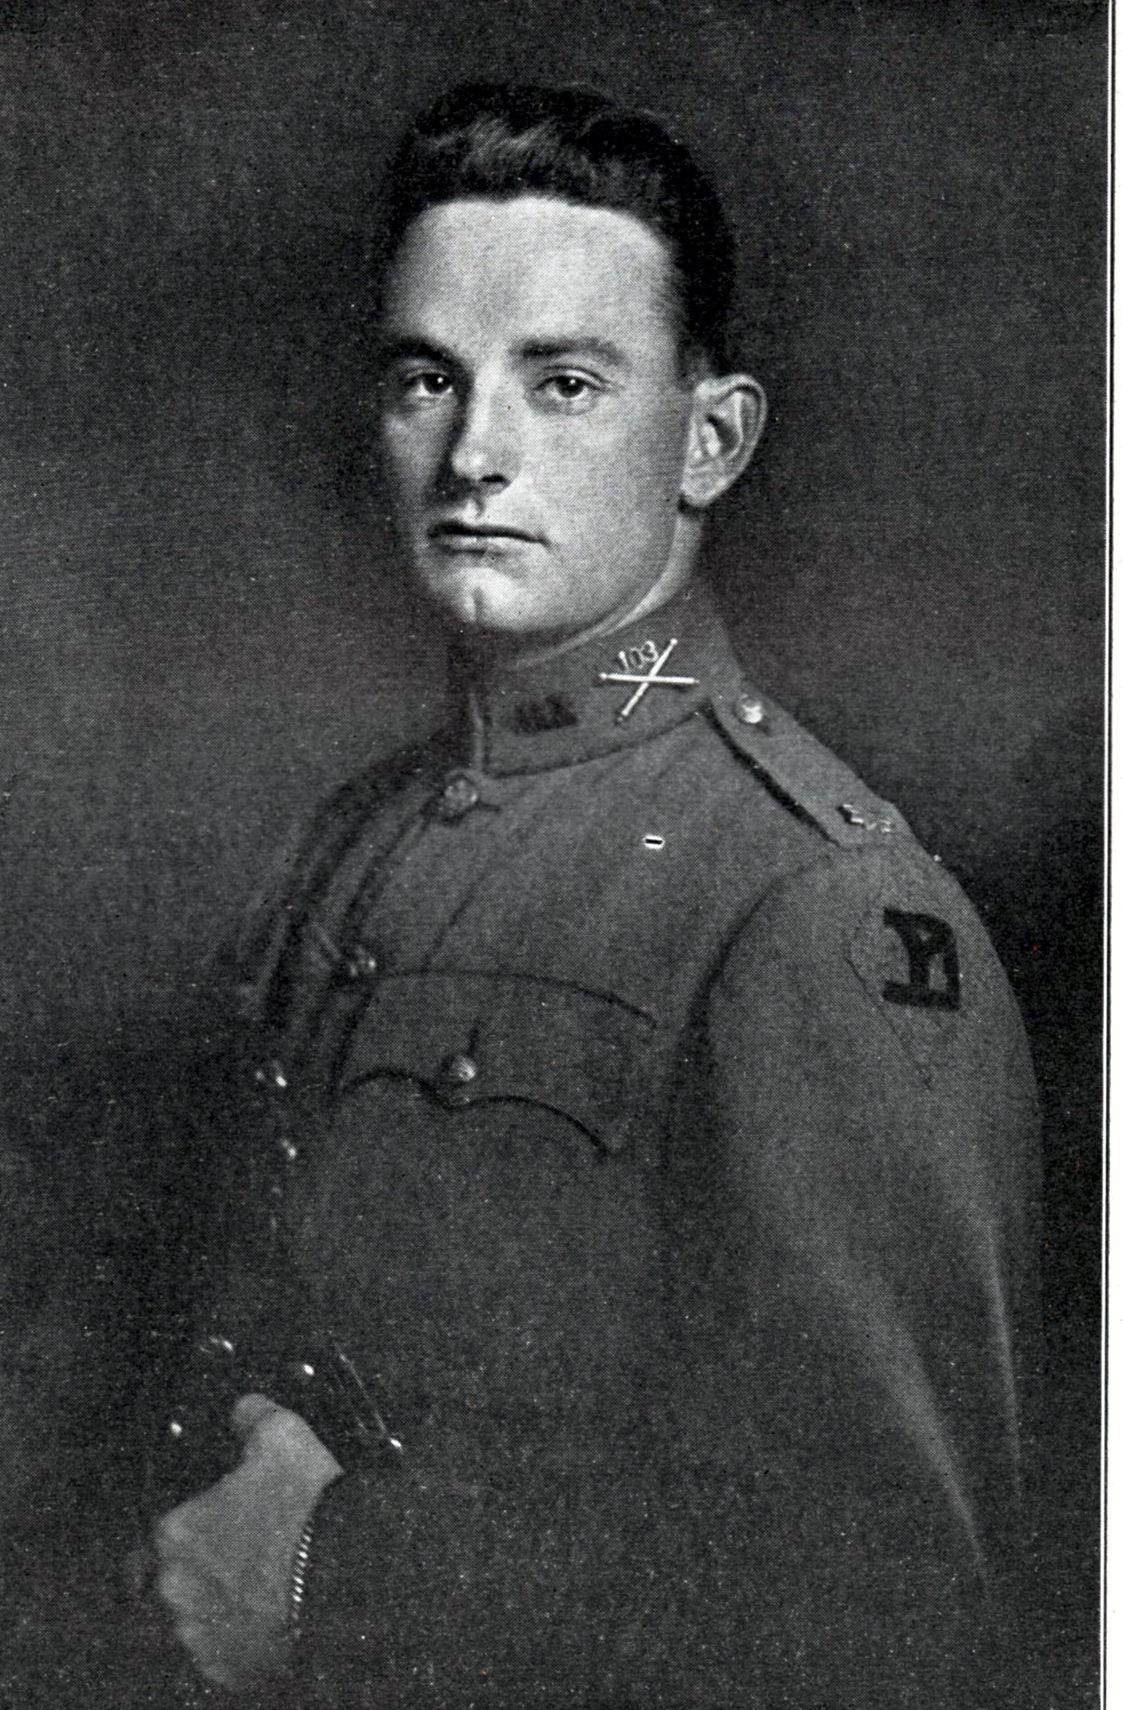 42nd Major Harold R. Barker